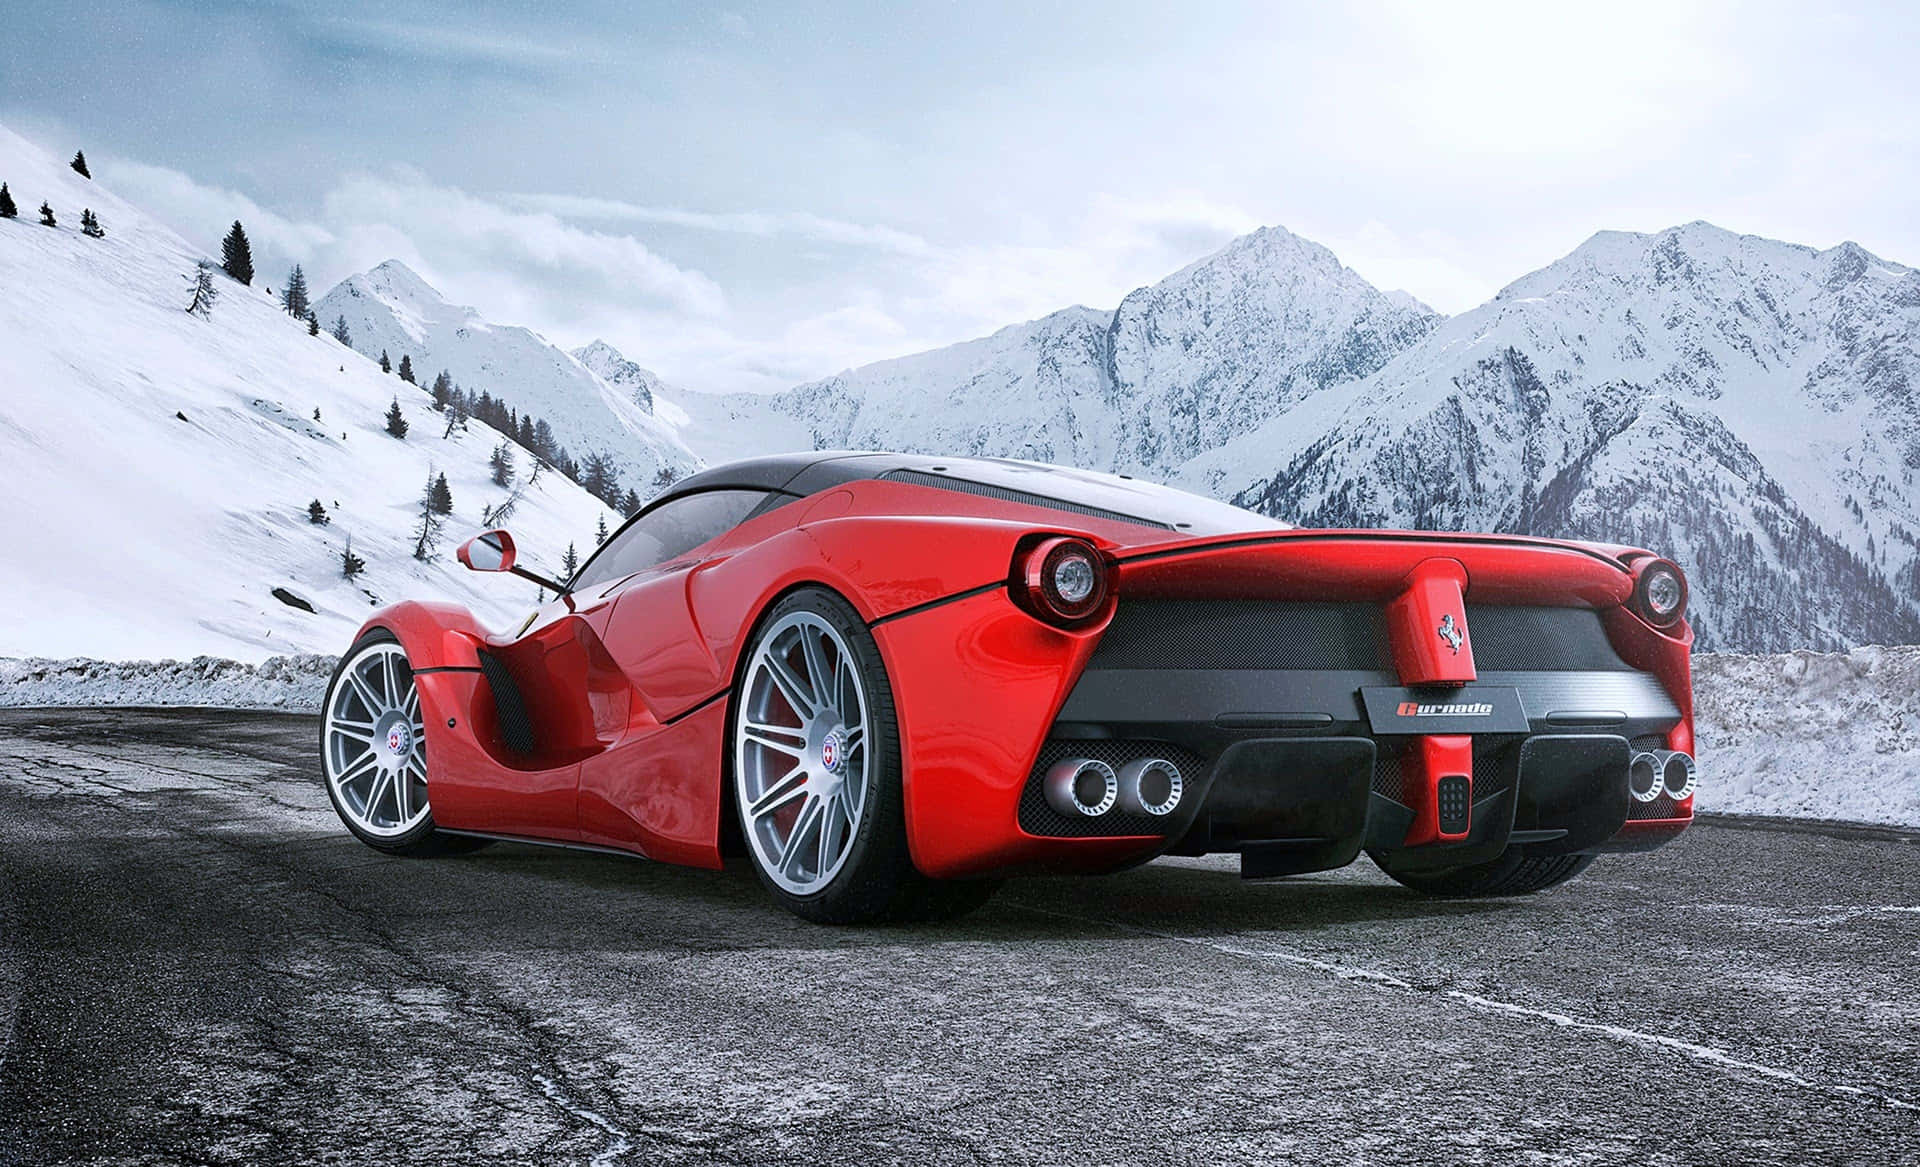 Stunning Red Ferrari LaFerrari in Motion Wallpaper